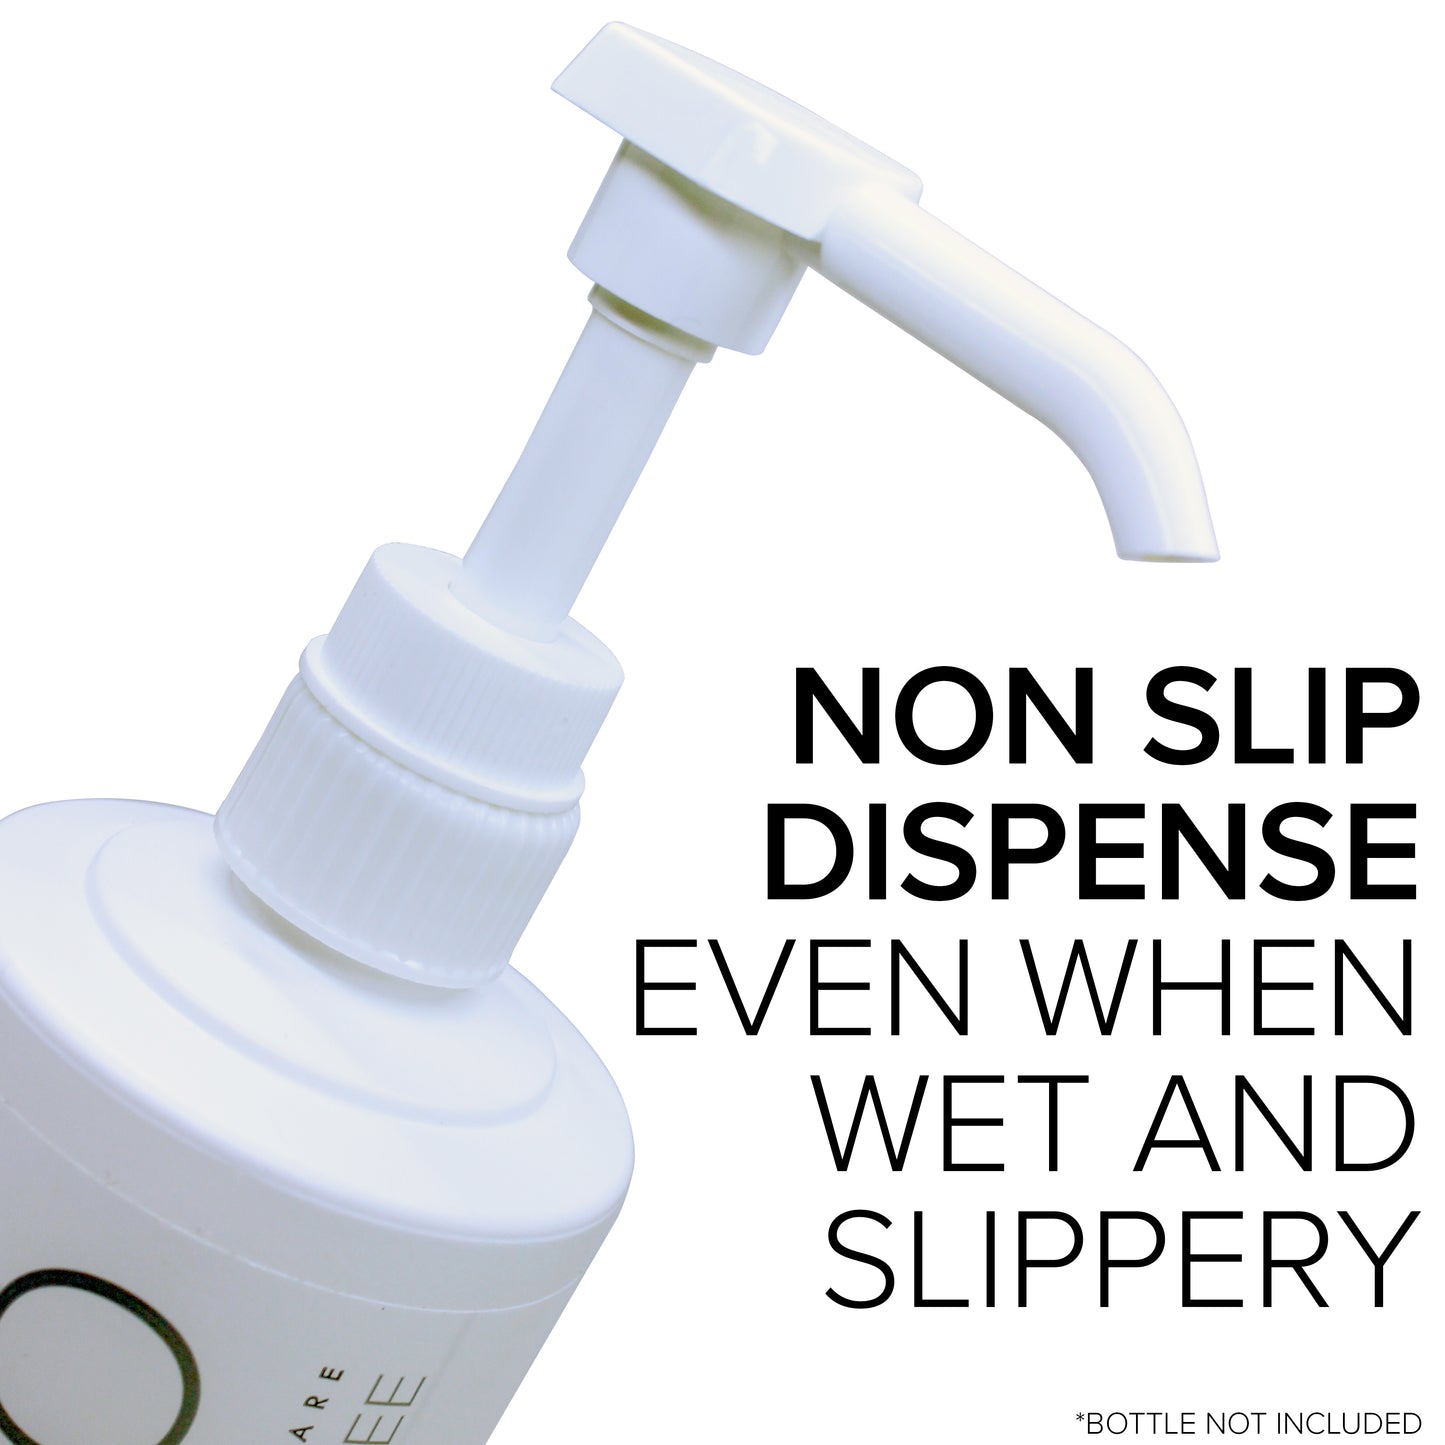 NYK1 Professional Universal Fit Shampoo Pump - Dispenses 4ml Dose